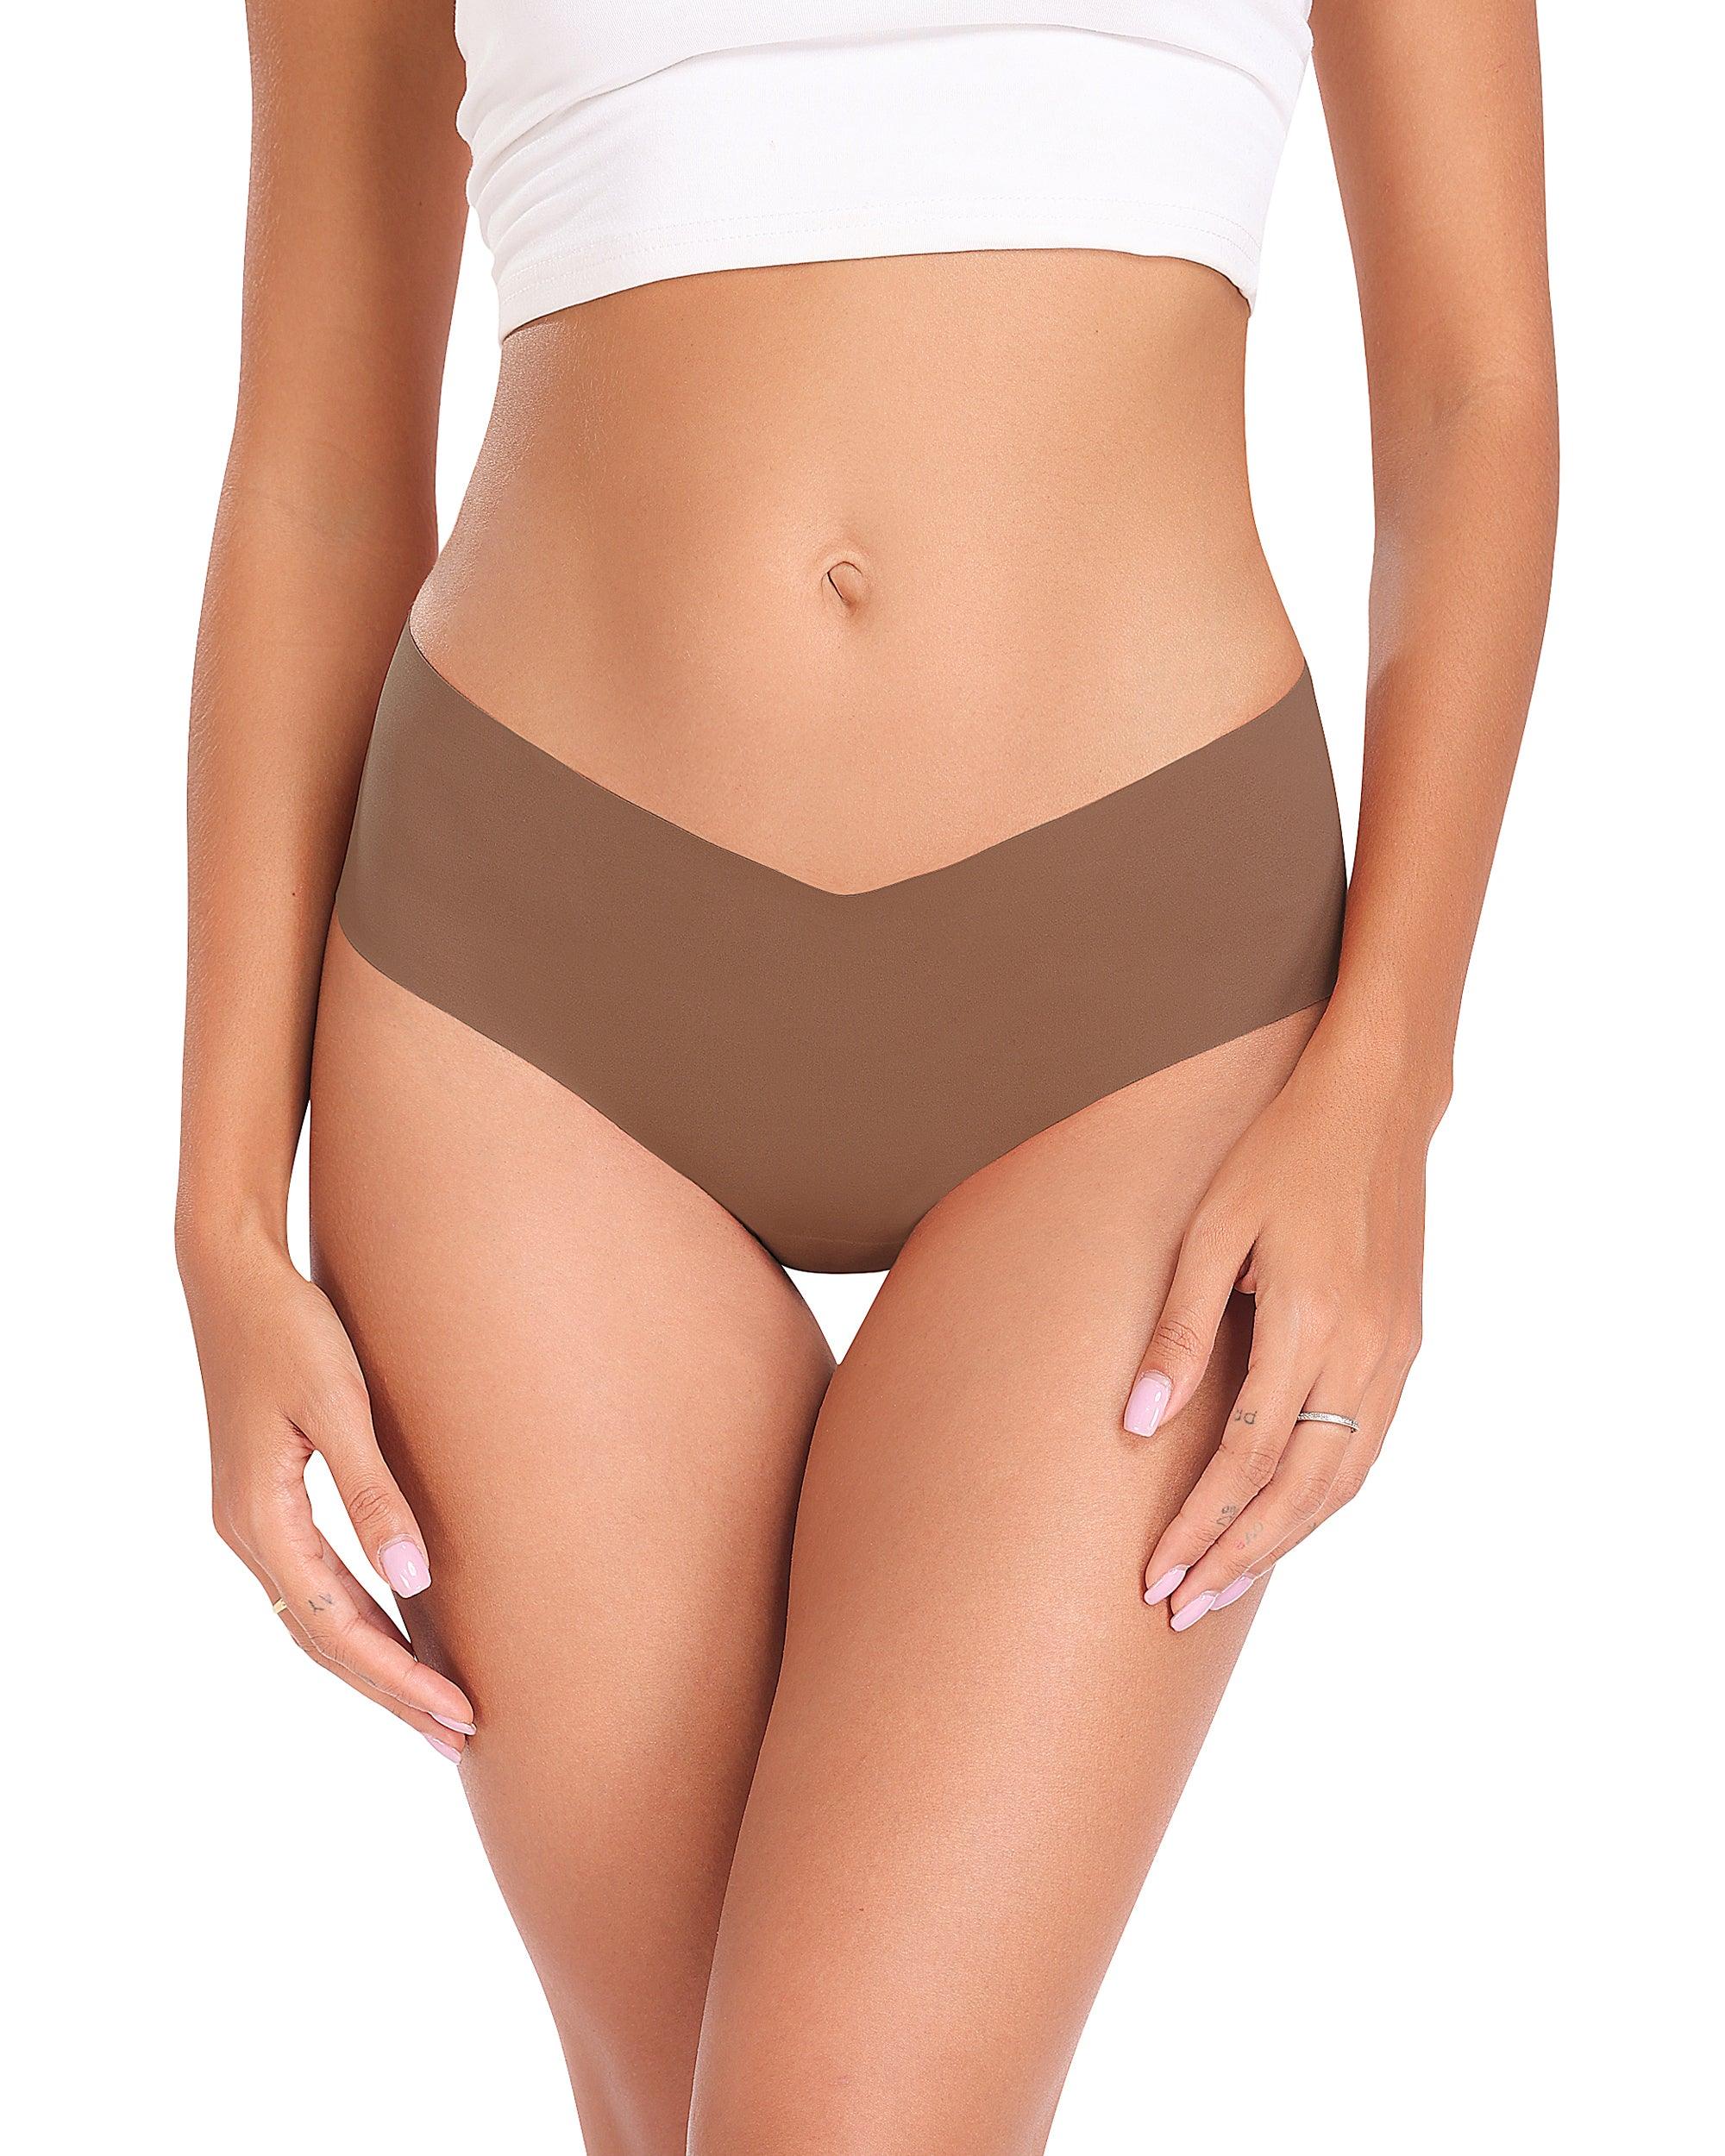 Altheanray Womens Underwear Bikini Silky Seamless Maldives